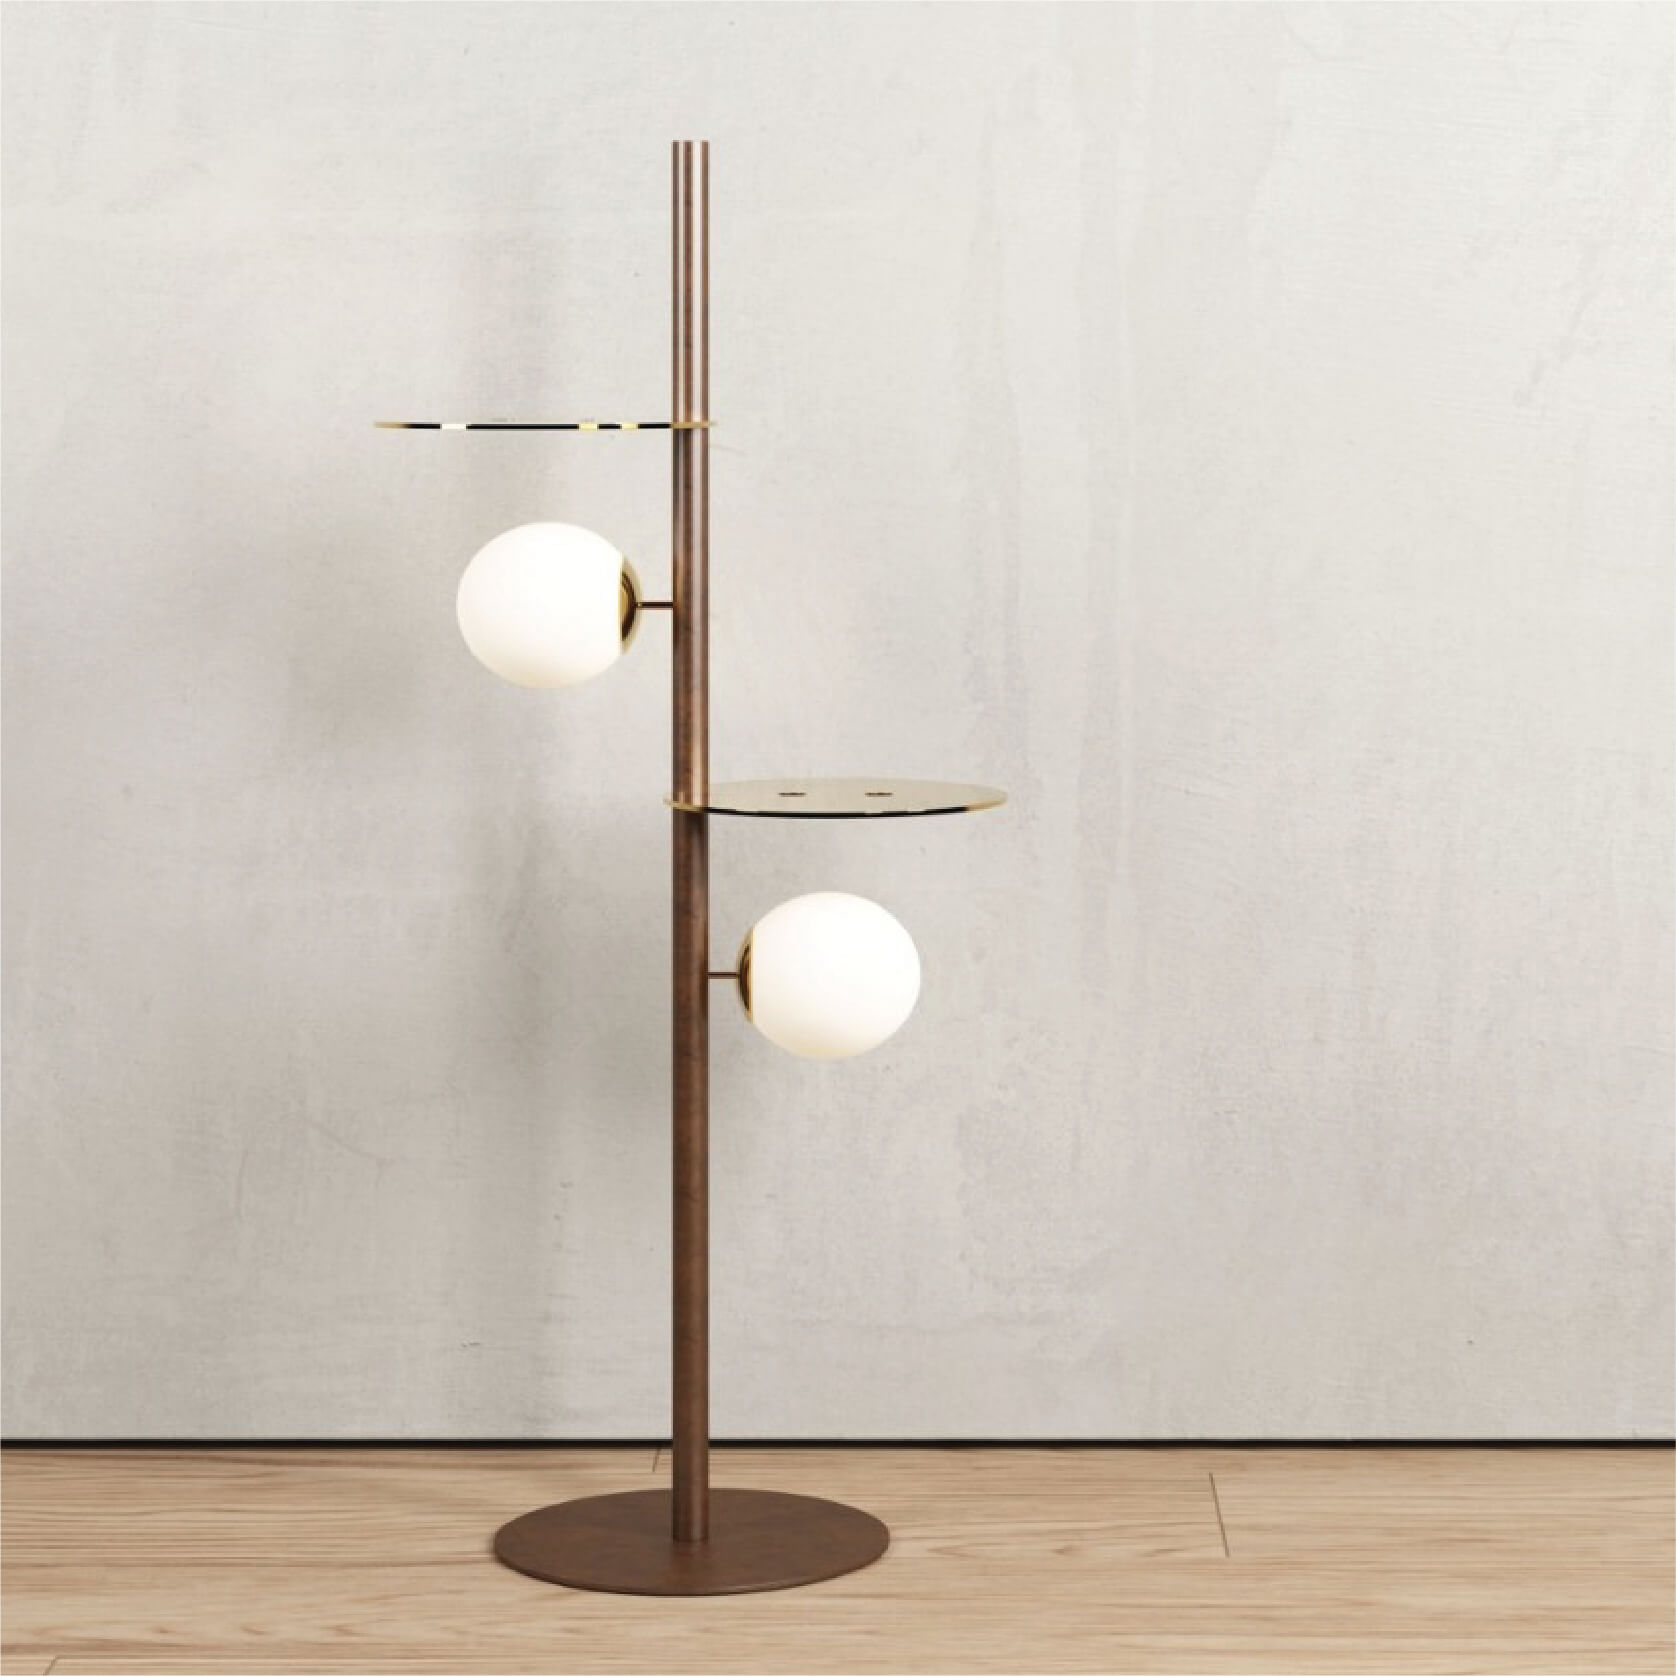 FLOOR LAMP by Venzon Lighting - Design Commune Feature